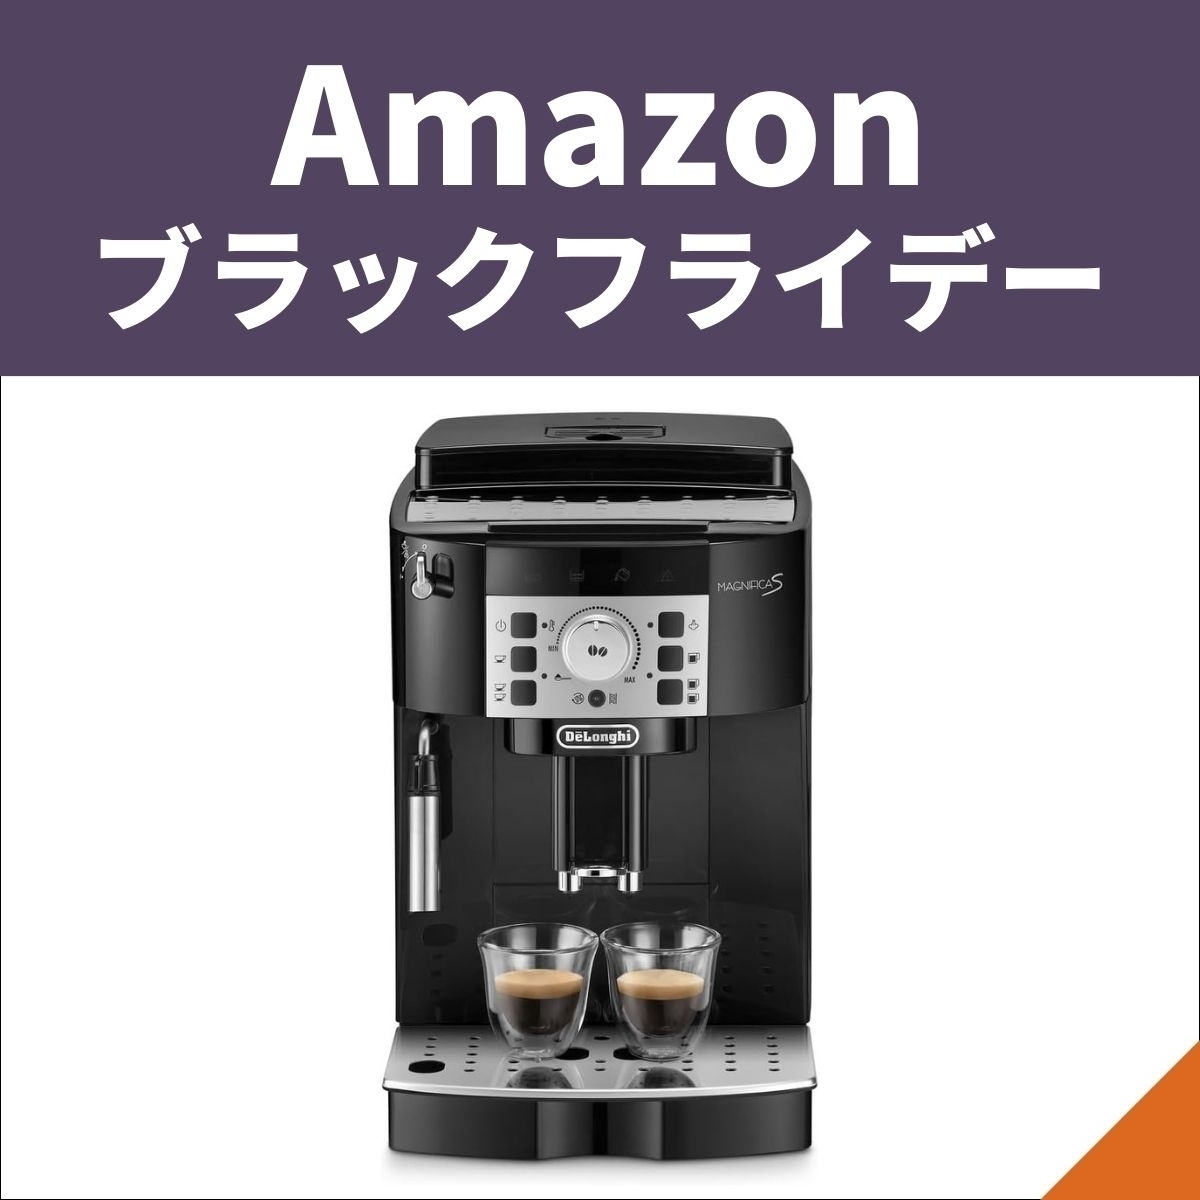 Amazonブラックフライデー】デロンギの全自動コーヒーマシンが先行